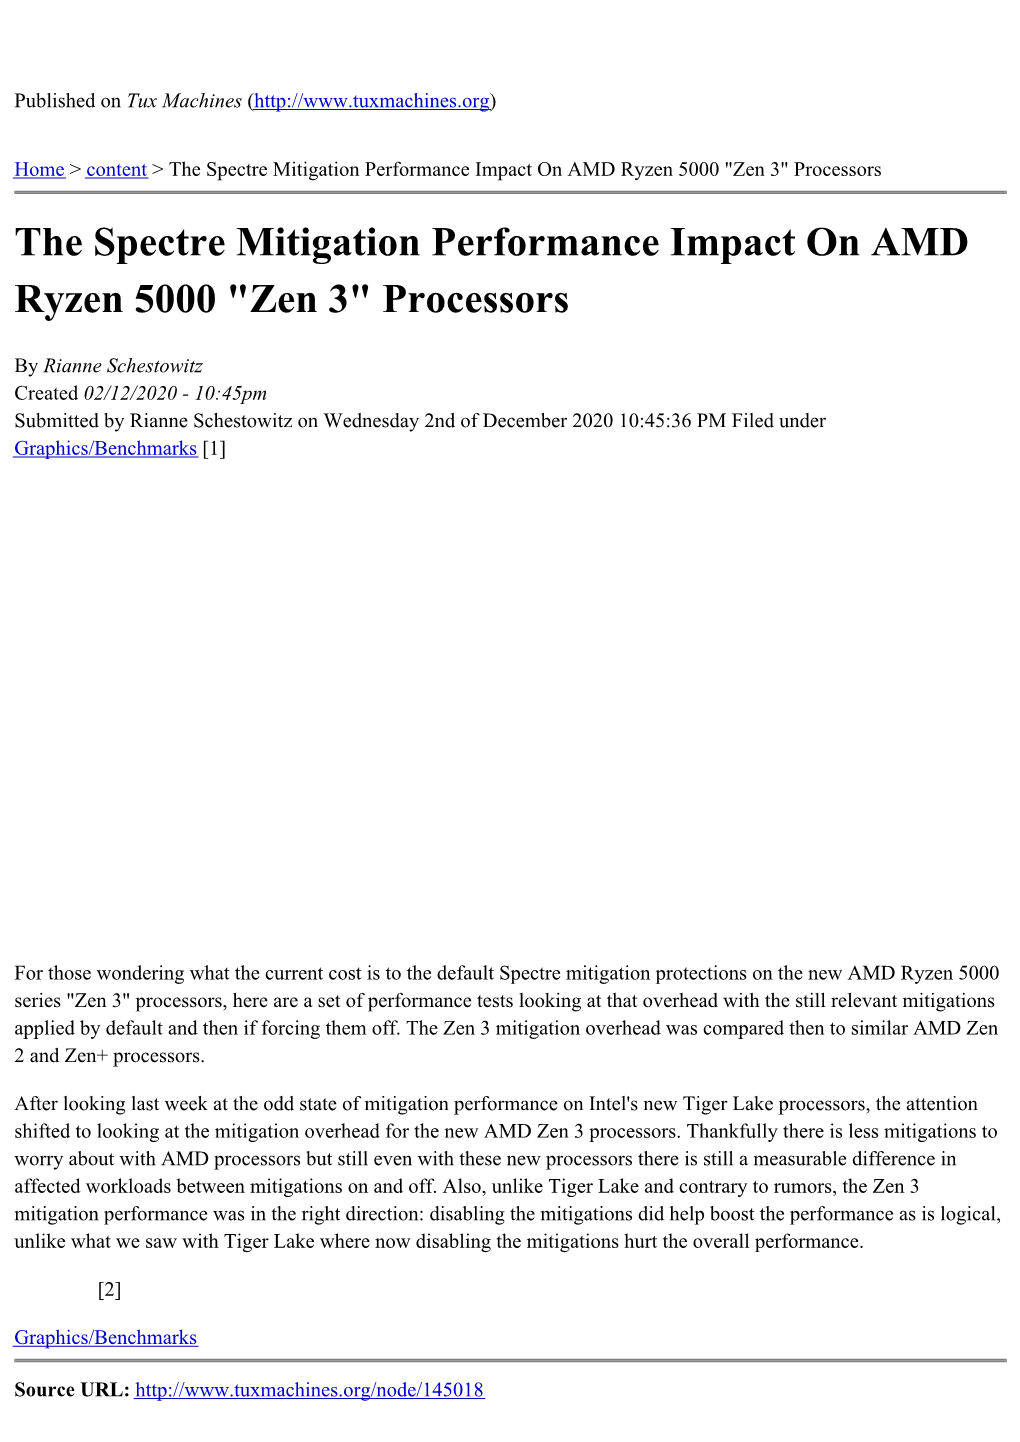 The Spectre Mitigation Performance Impact on AMD Ryzen 5000 "Zen 3" Processors